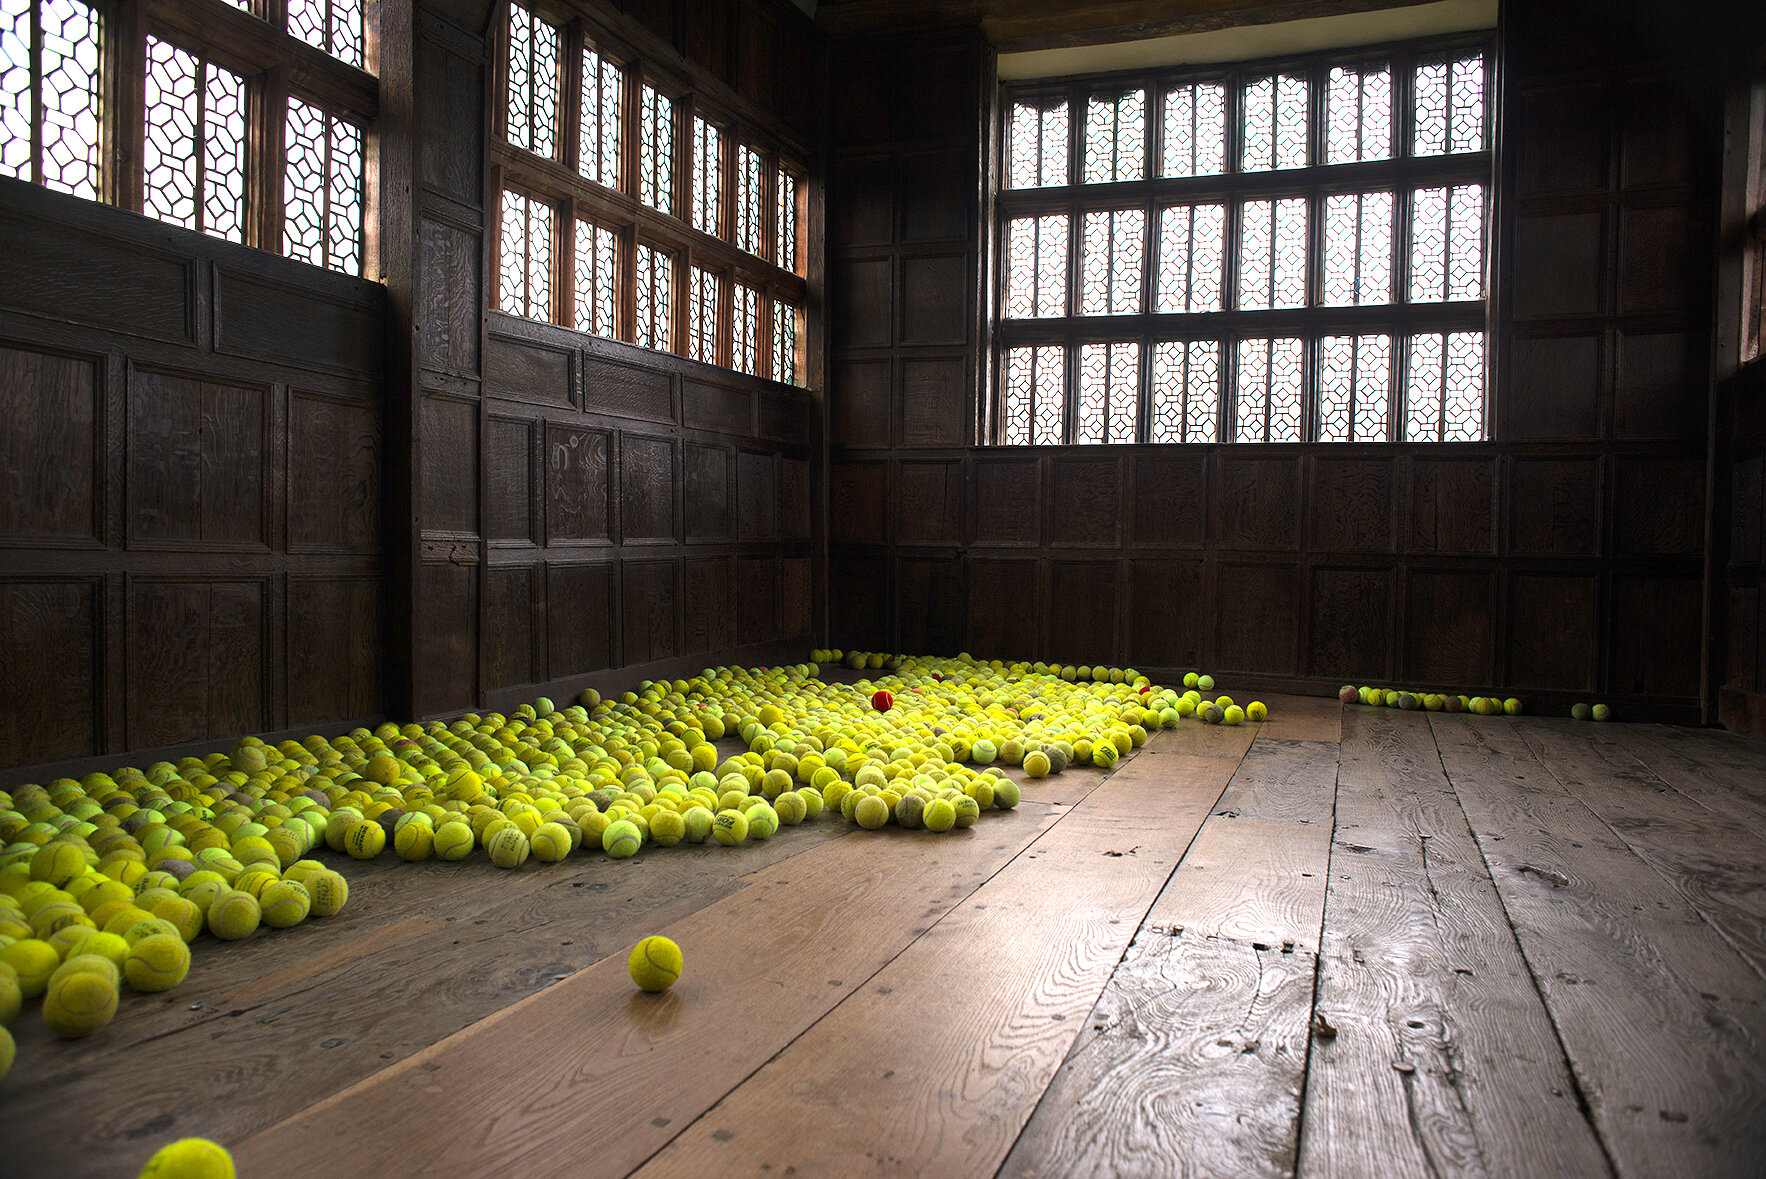 Gathering found tannis balls video Little Moreton Hall Trust New Art 2019 (1).jpg